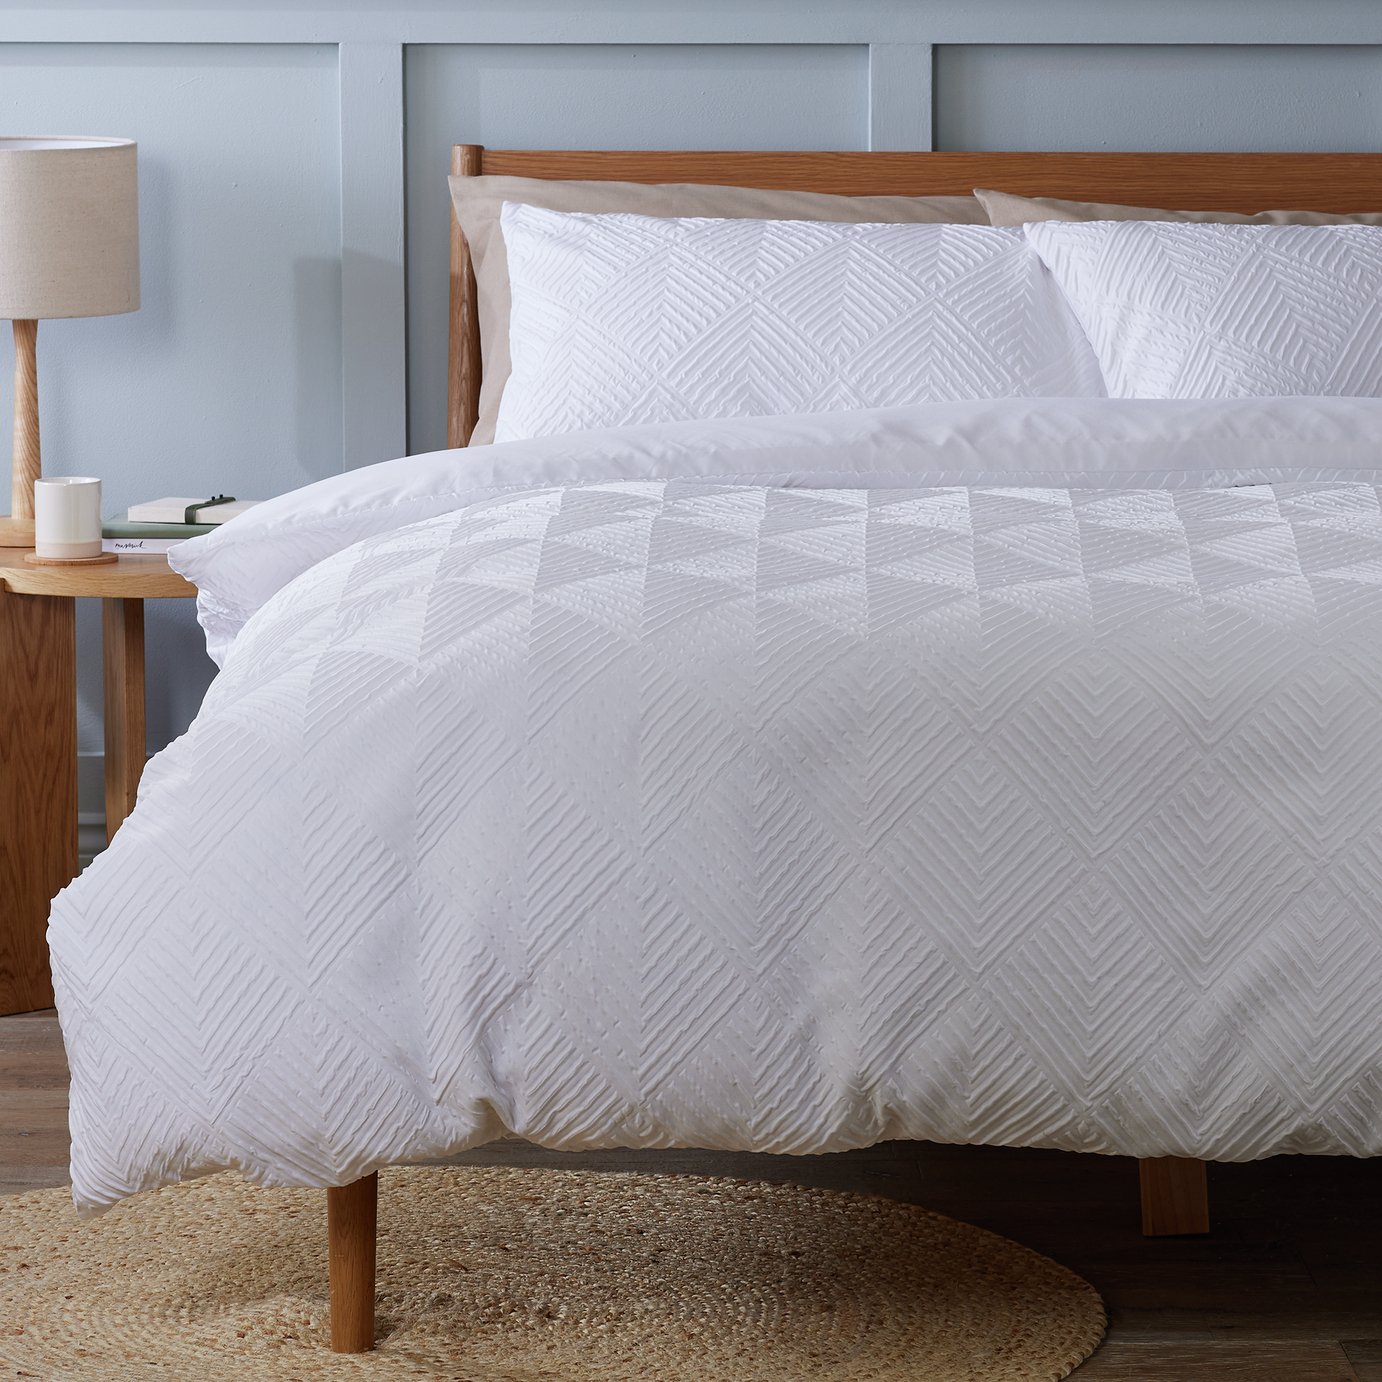 Argos Home Textured Embossed White Bedding Set - King size